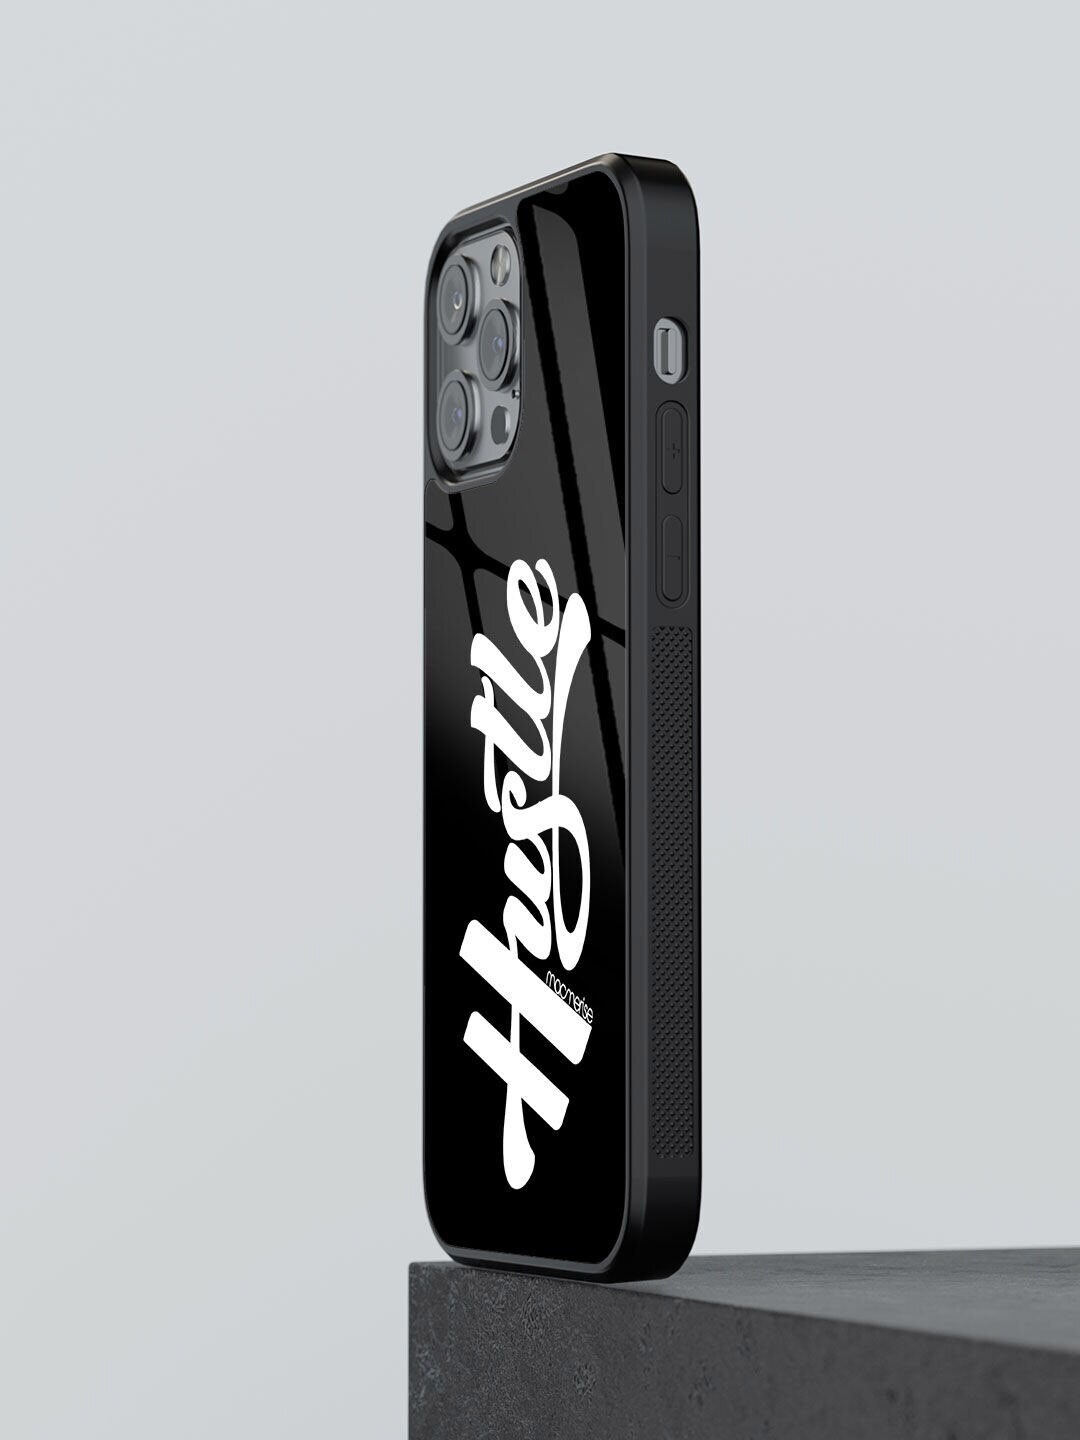 macmerise Black Printed Glass Phone Cover iPhone 12 Pro Price in India